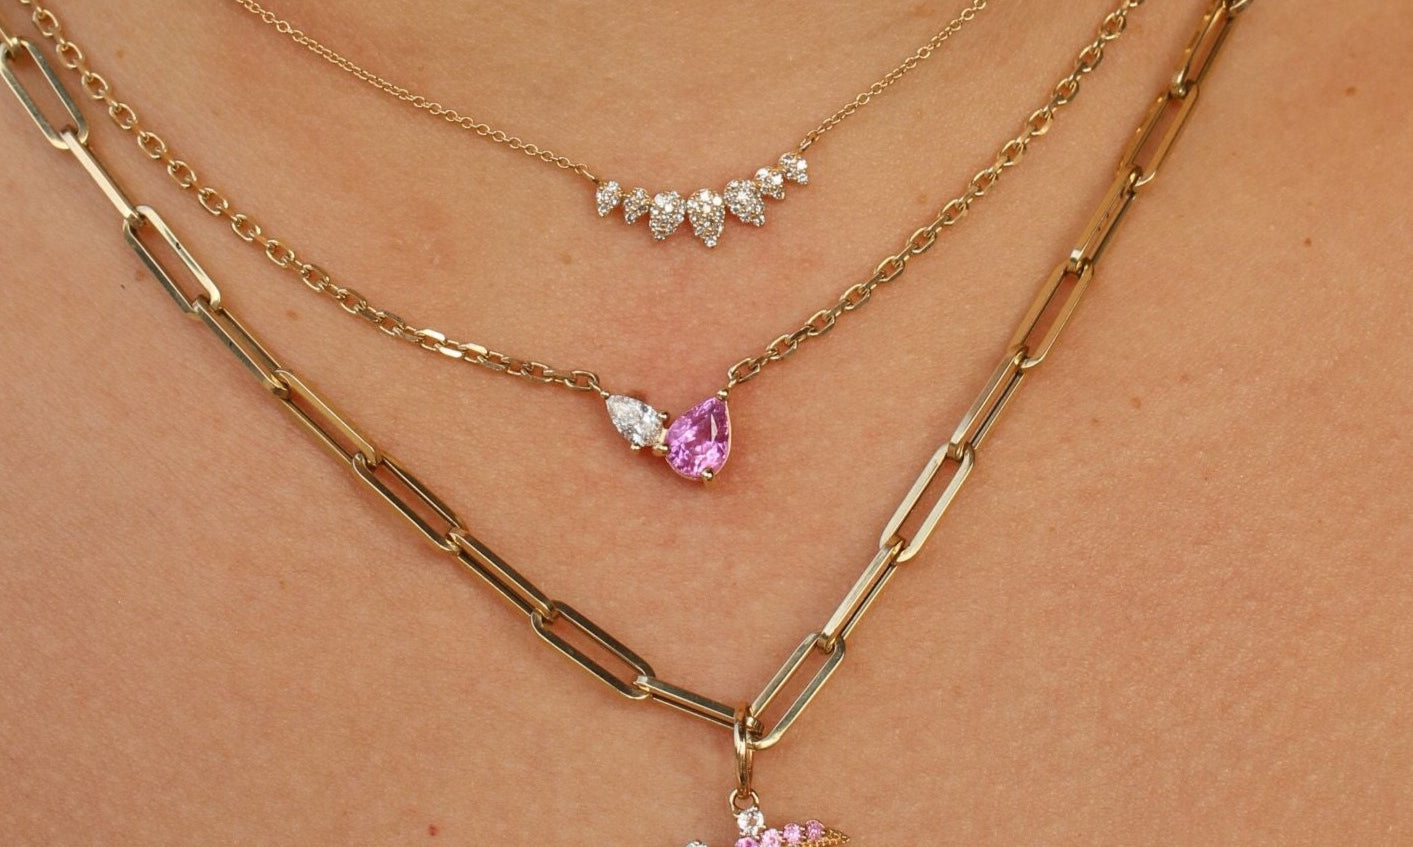 Gold Small Link Chain Necklace by Monisha Melwani Jewelry